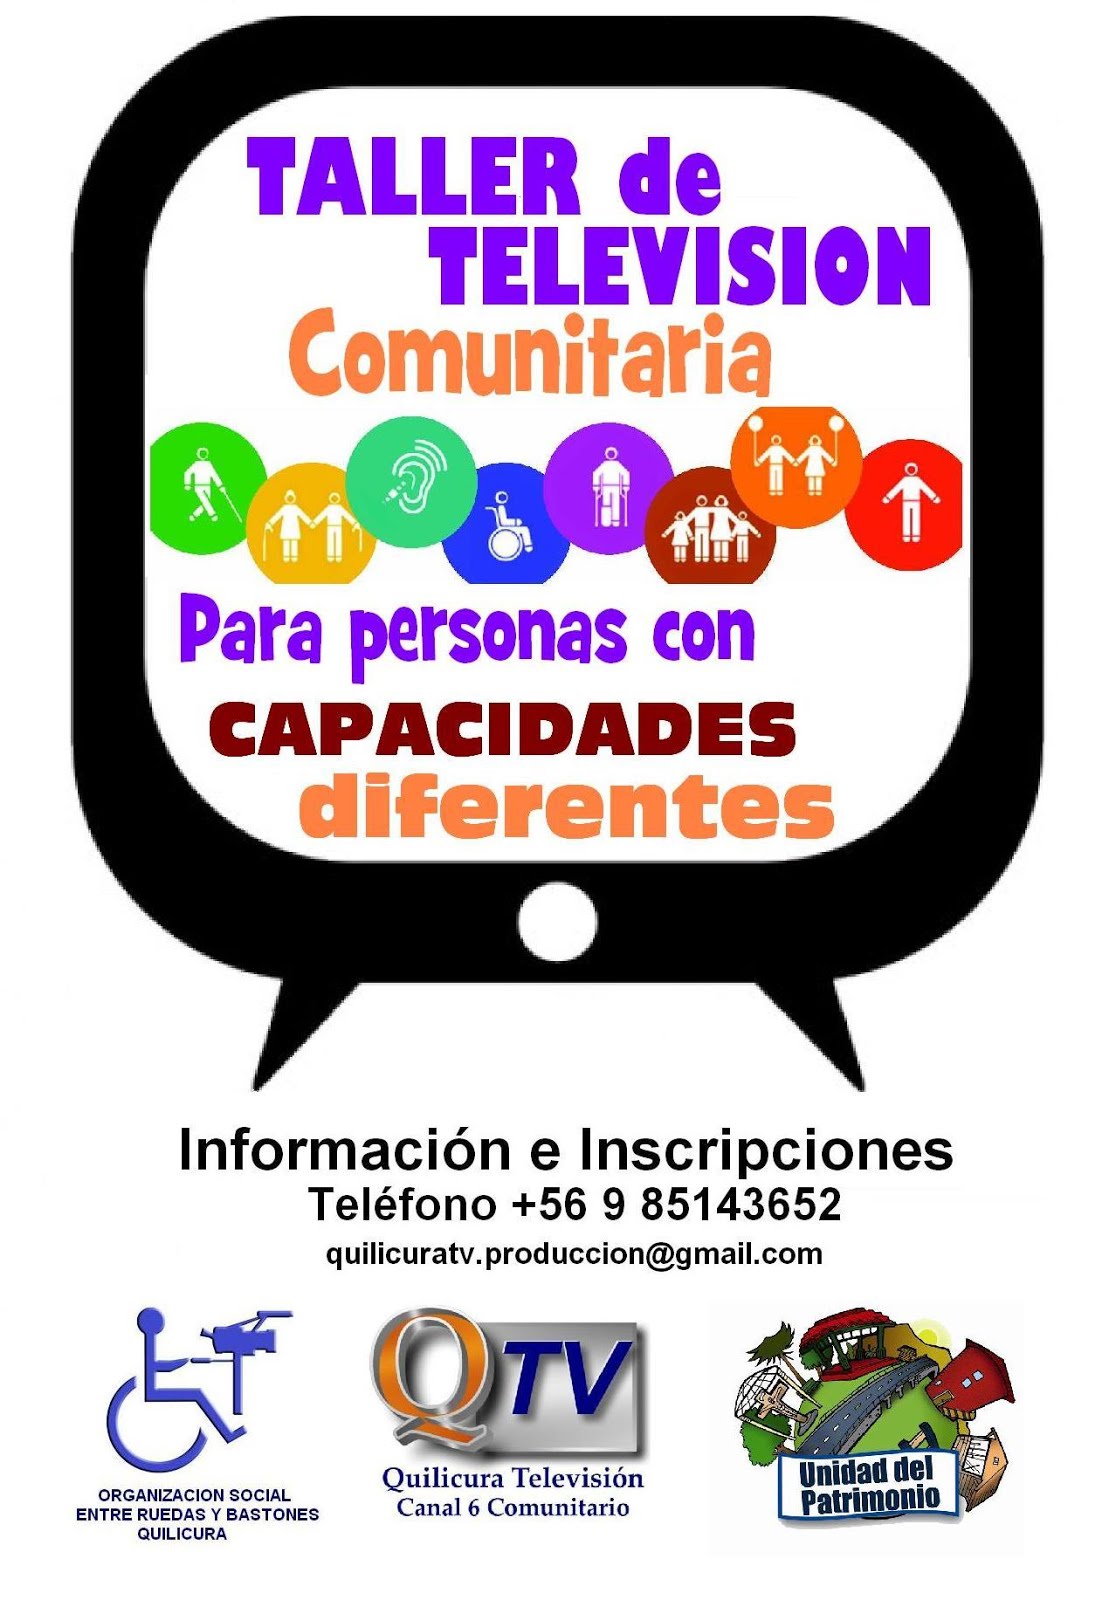 TALLER DE TELEVISION COMUNITARIA PARA PERSONAS CON CAPACIDADES DIFERENTES EN QUILICURA